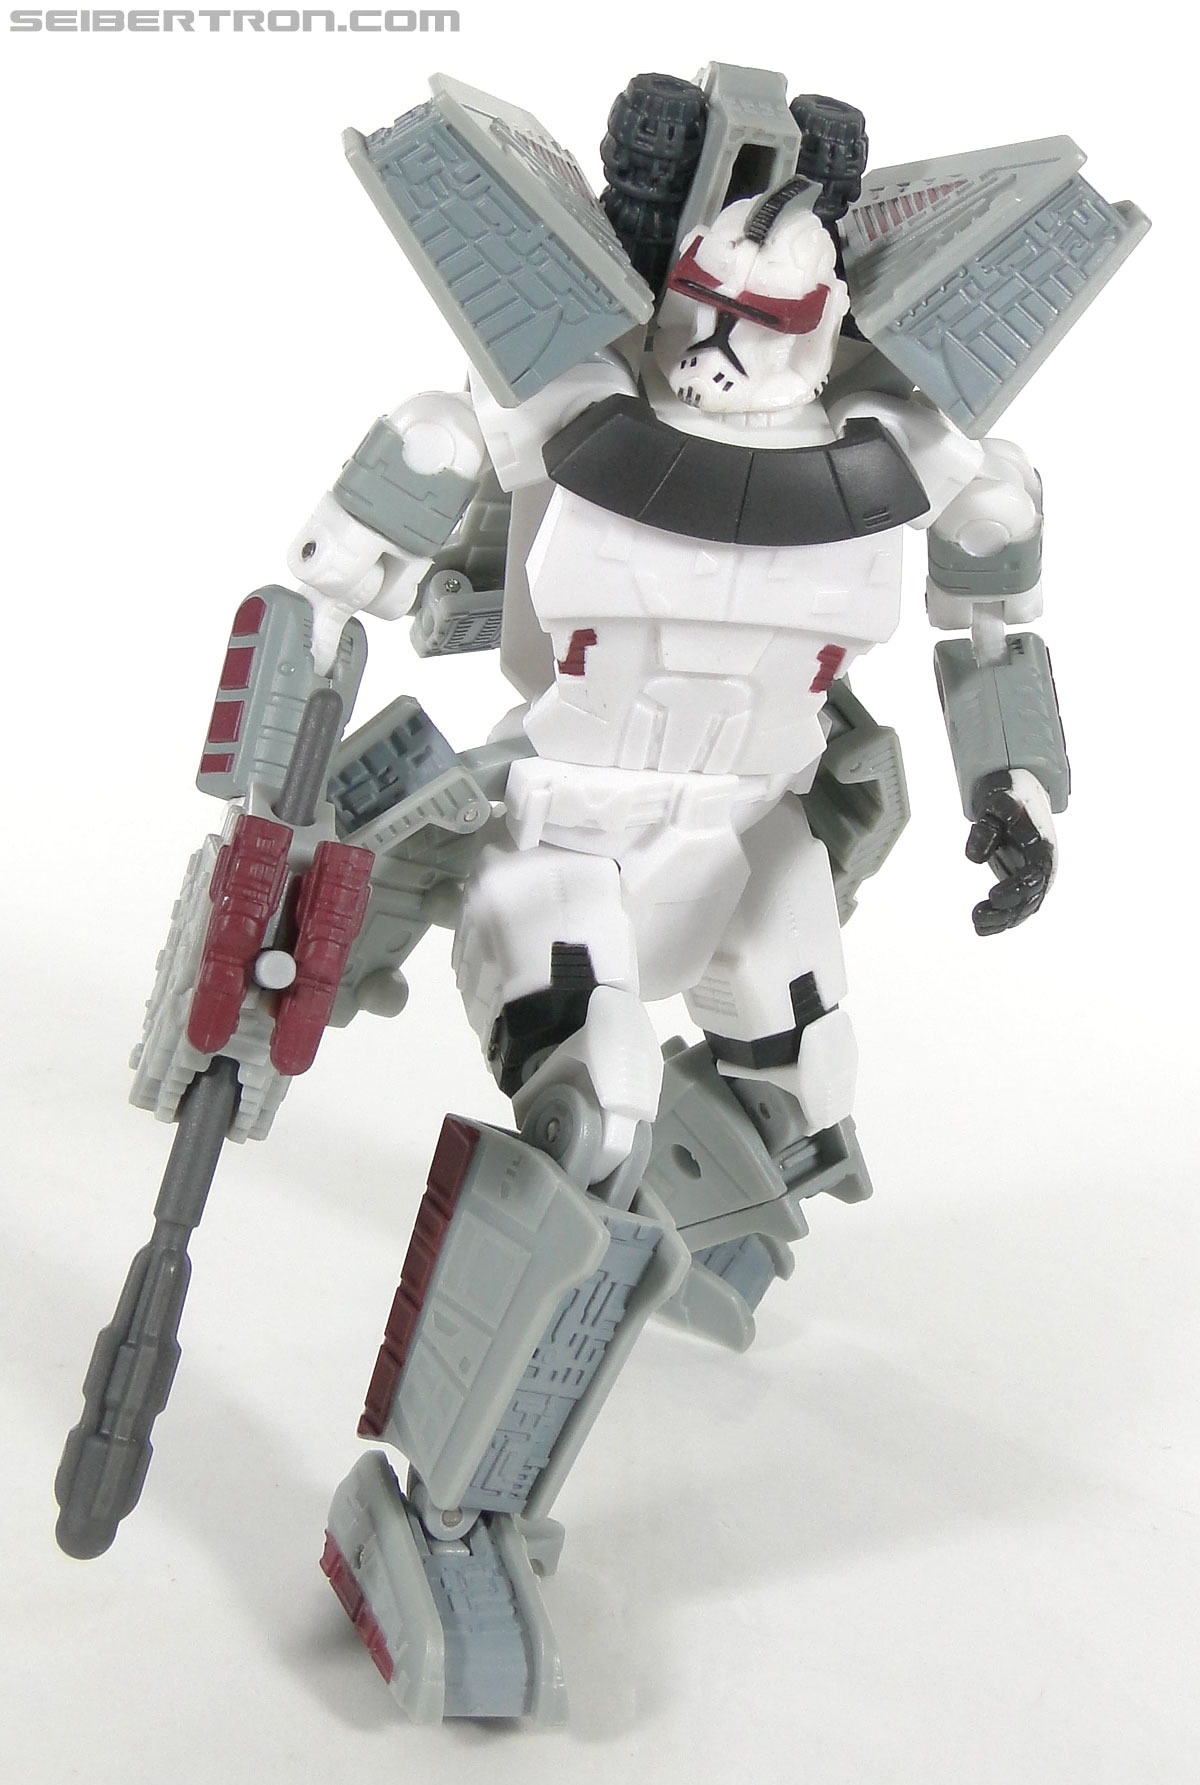 Star Wars Transformers Lieutenant Thire (Republic Attack Cruiser) (Image #71 of 76)